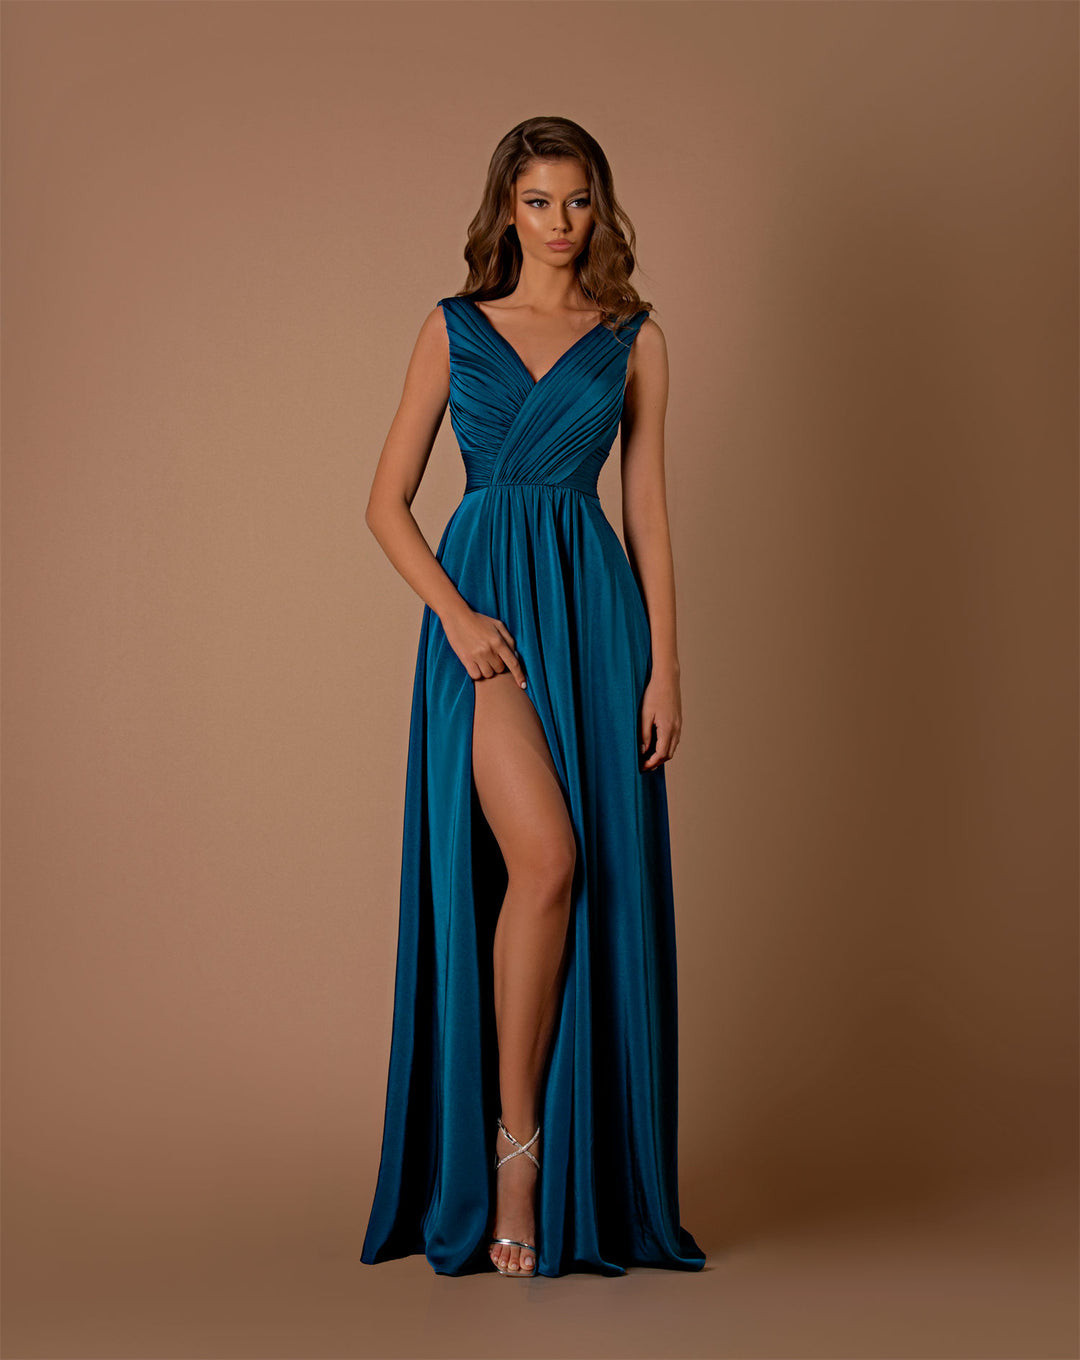 Laura Dress by Nicoletta NB1002 - ElissaJay Boutique